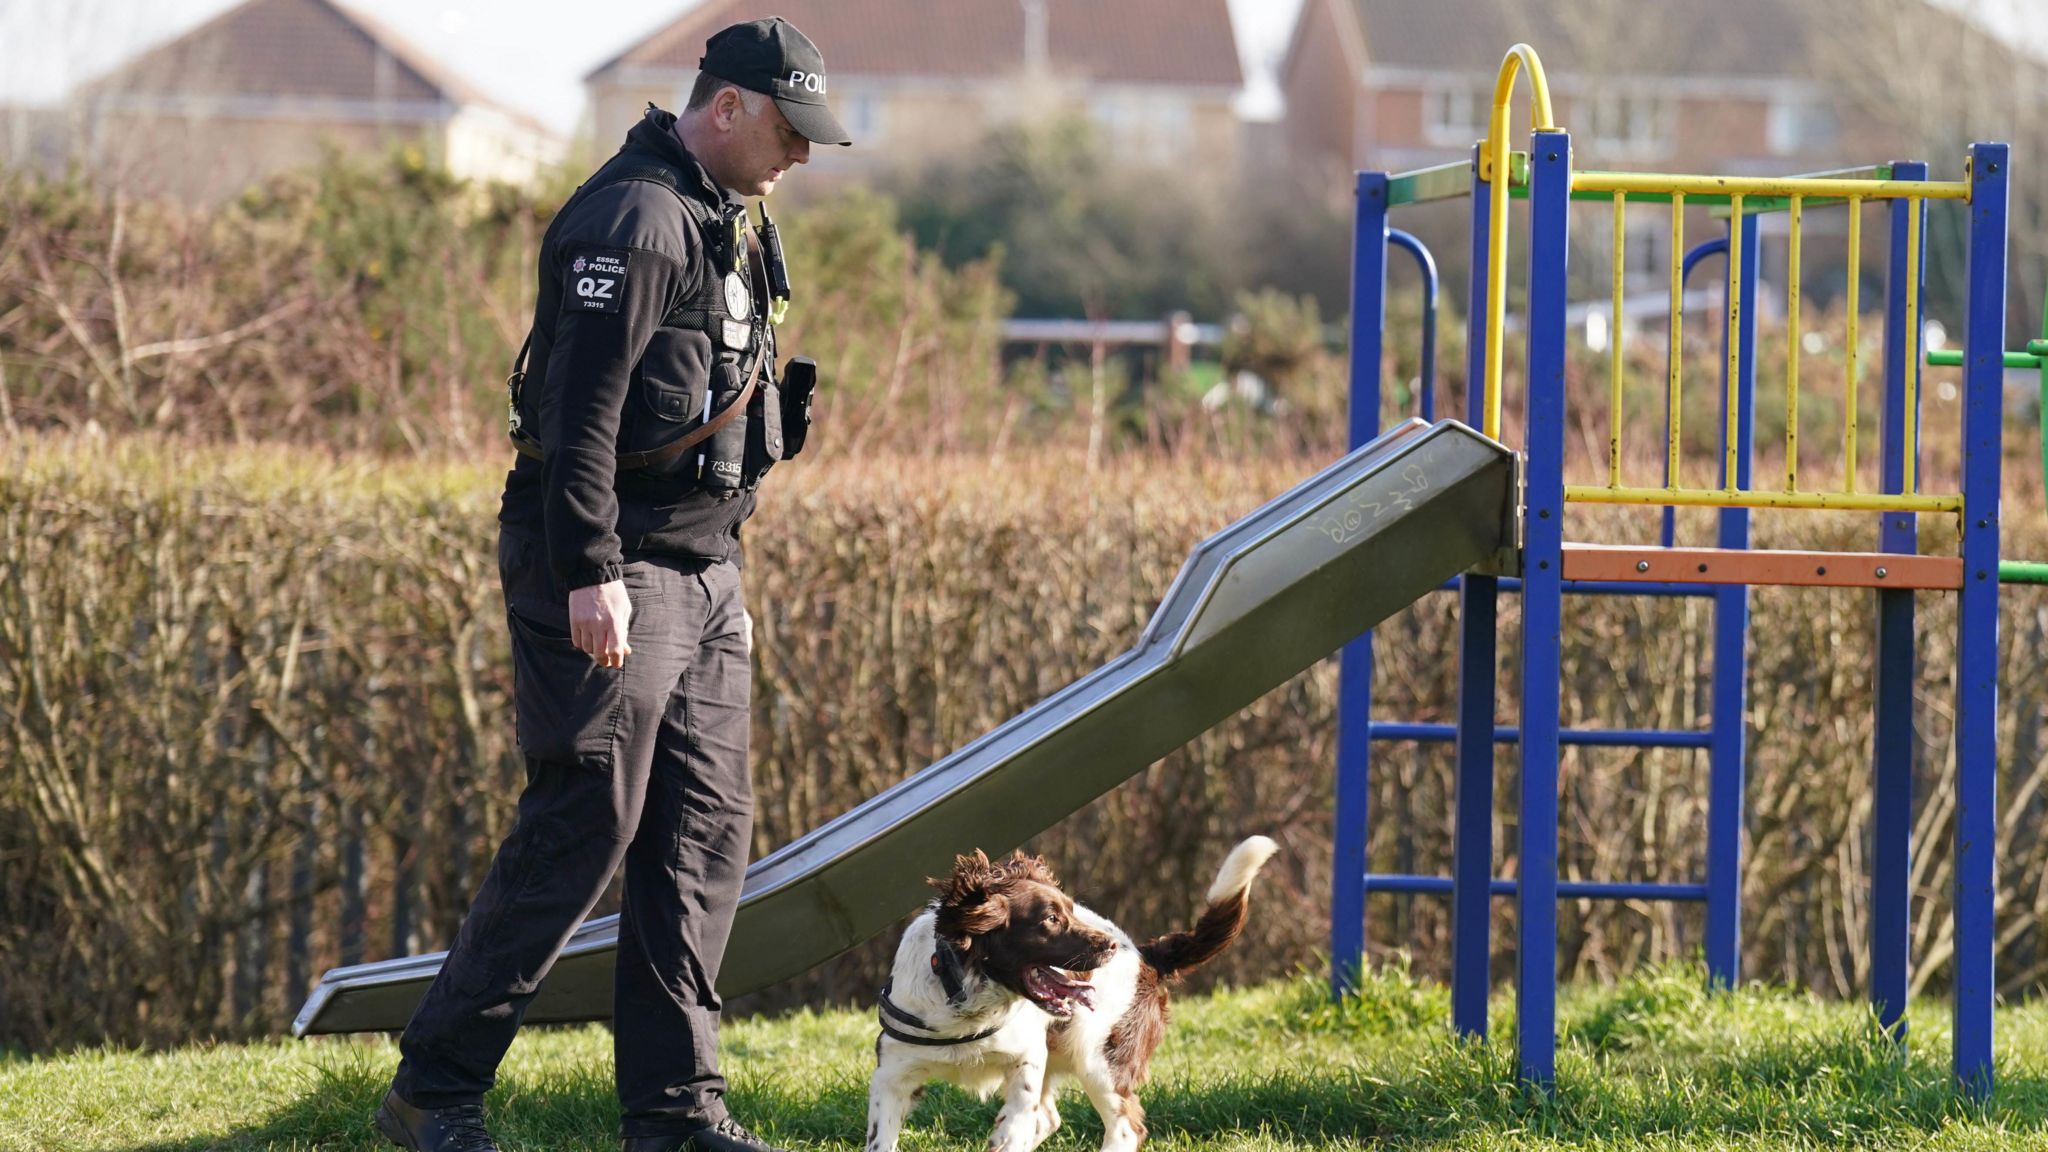 Police and police dog